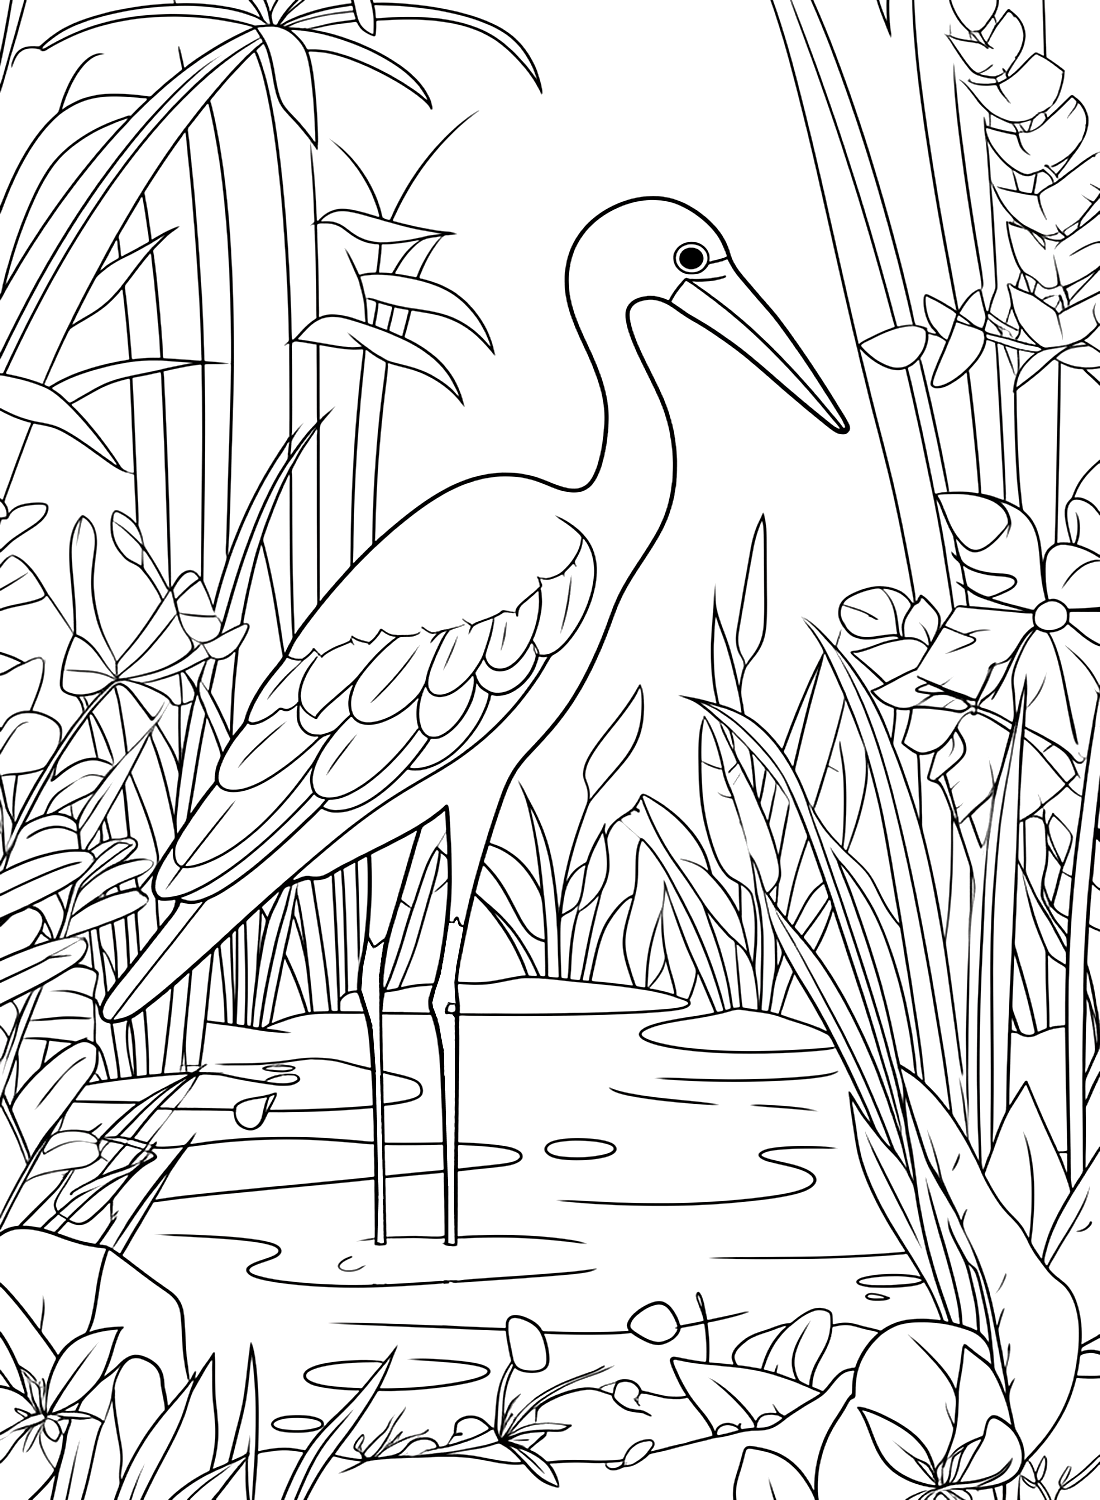 Stork in the Swamp from Stork